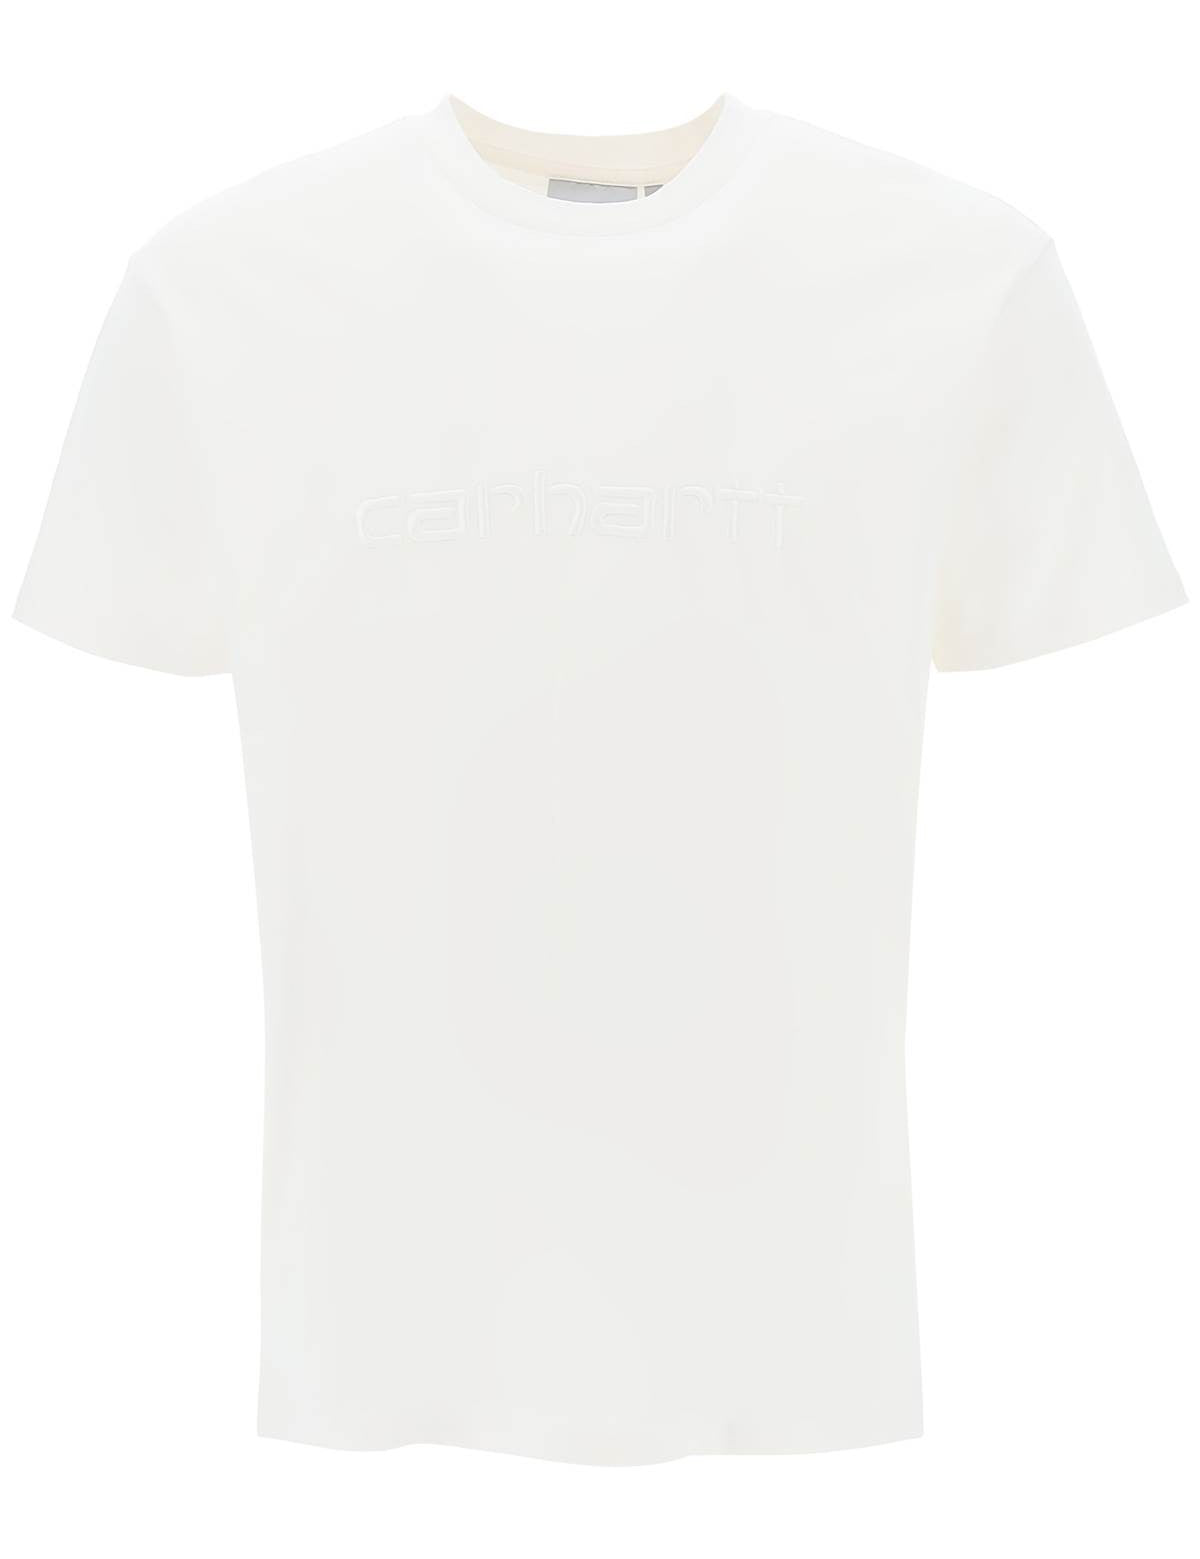 carhartt-wip-duster-t-shirt.jpg